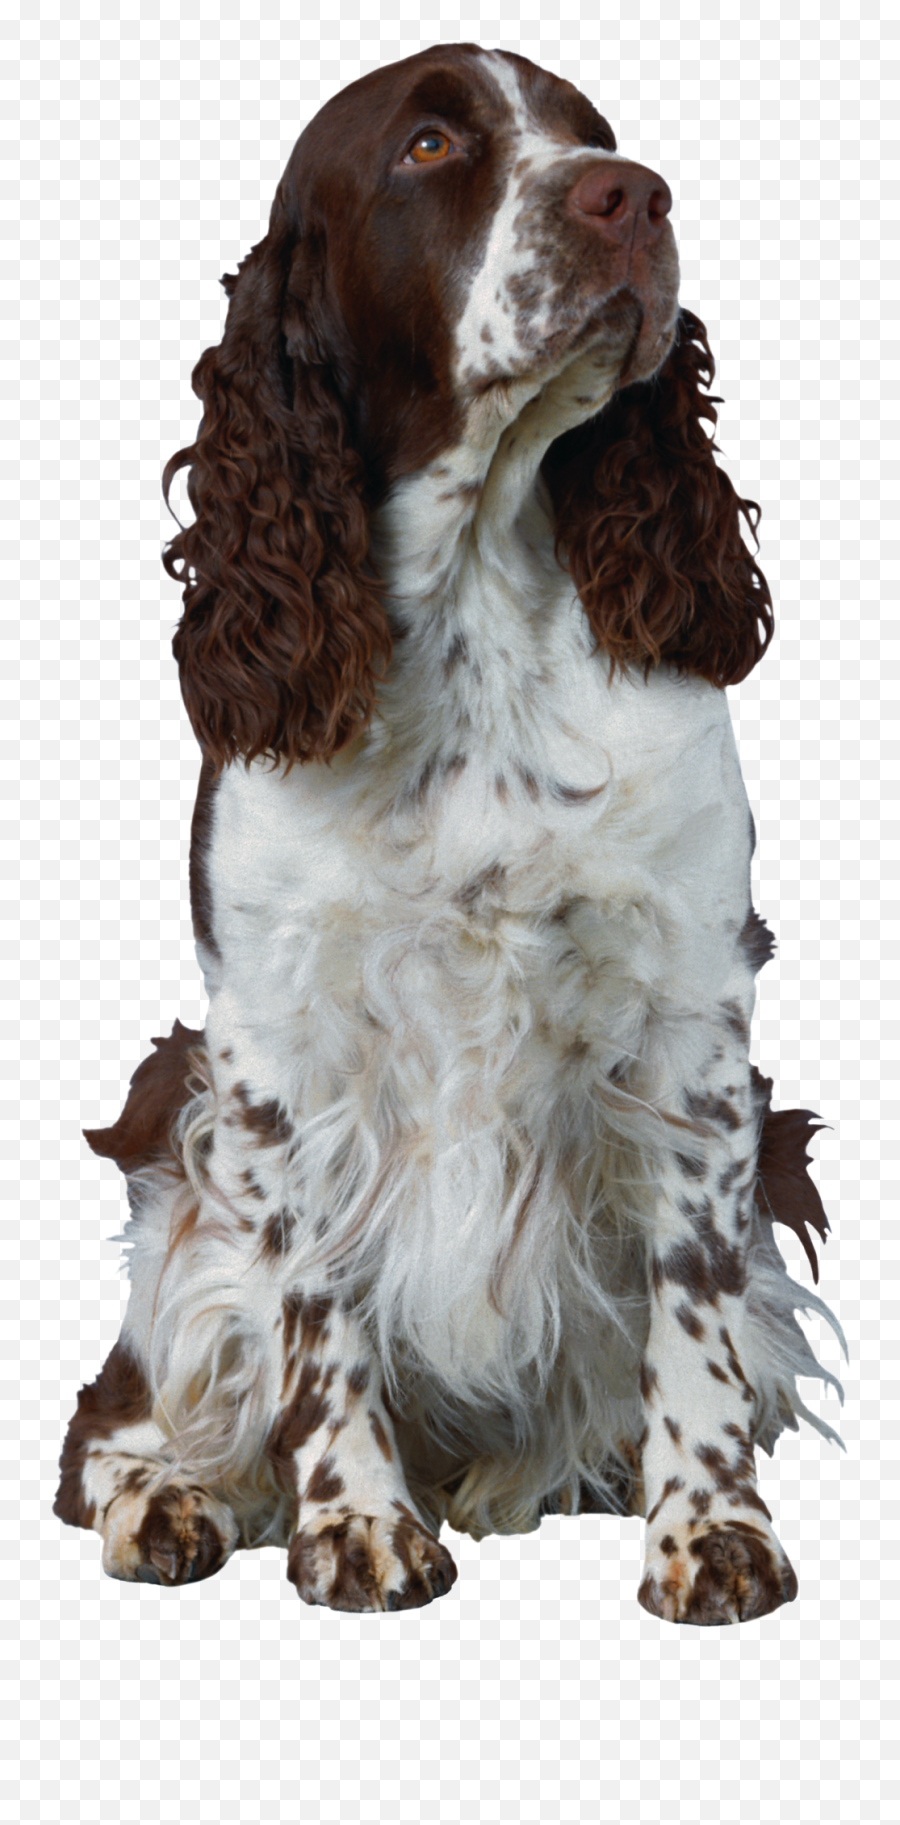 Dog Png Transparent Background - High Quality Image For Free Emoji,Paw Patrol Transparent Background